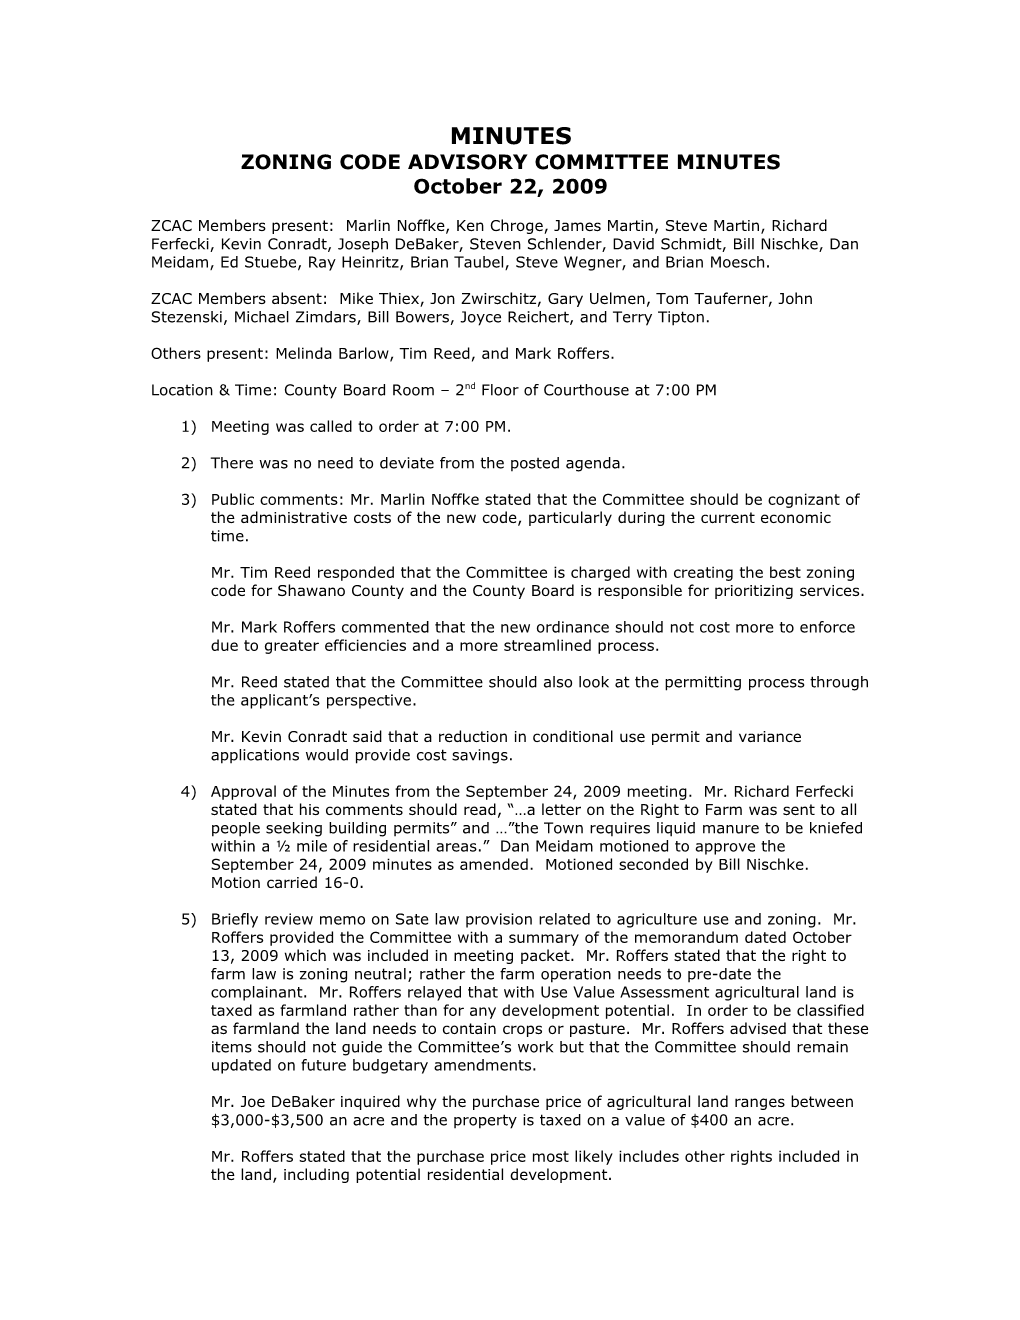 Zoning Code Advisory Committee Minutes